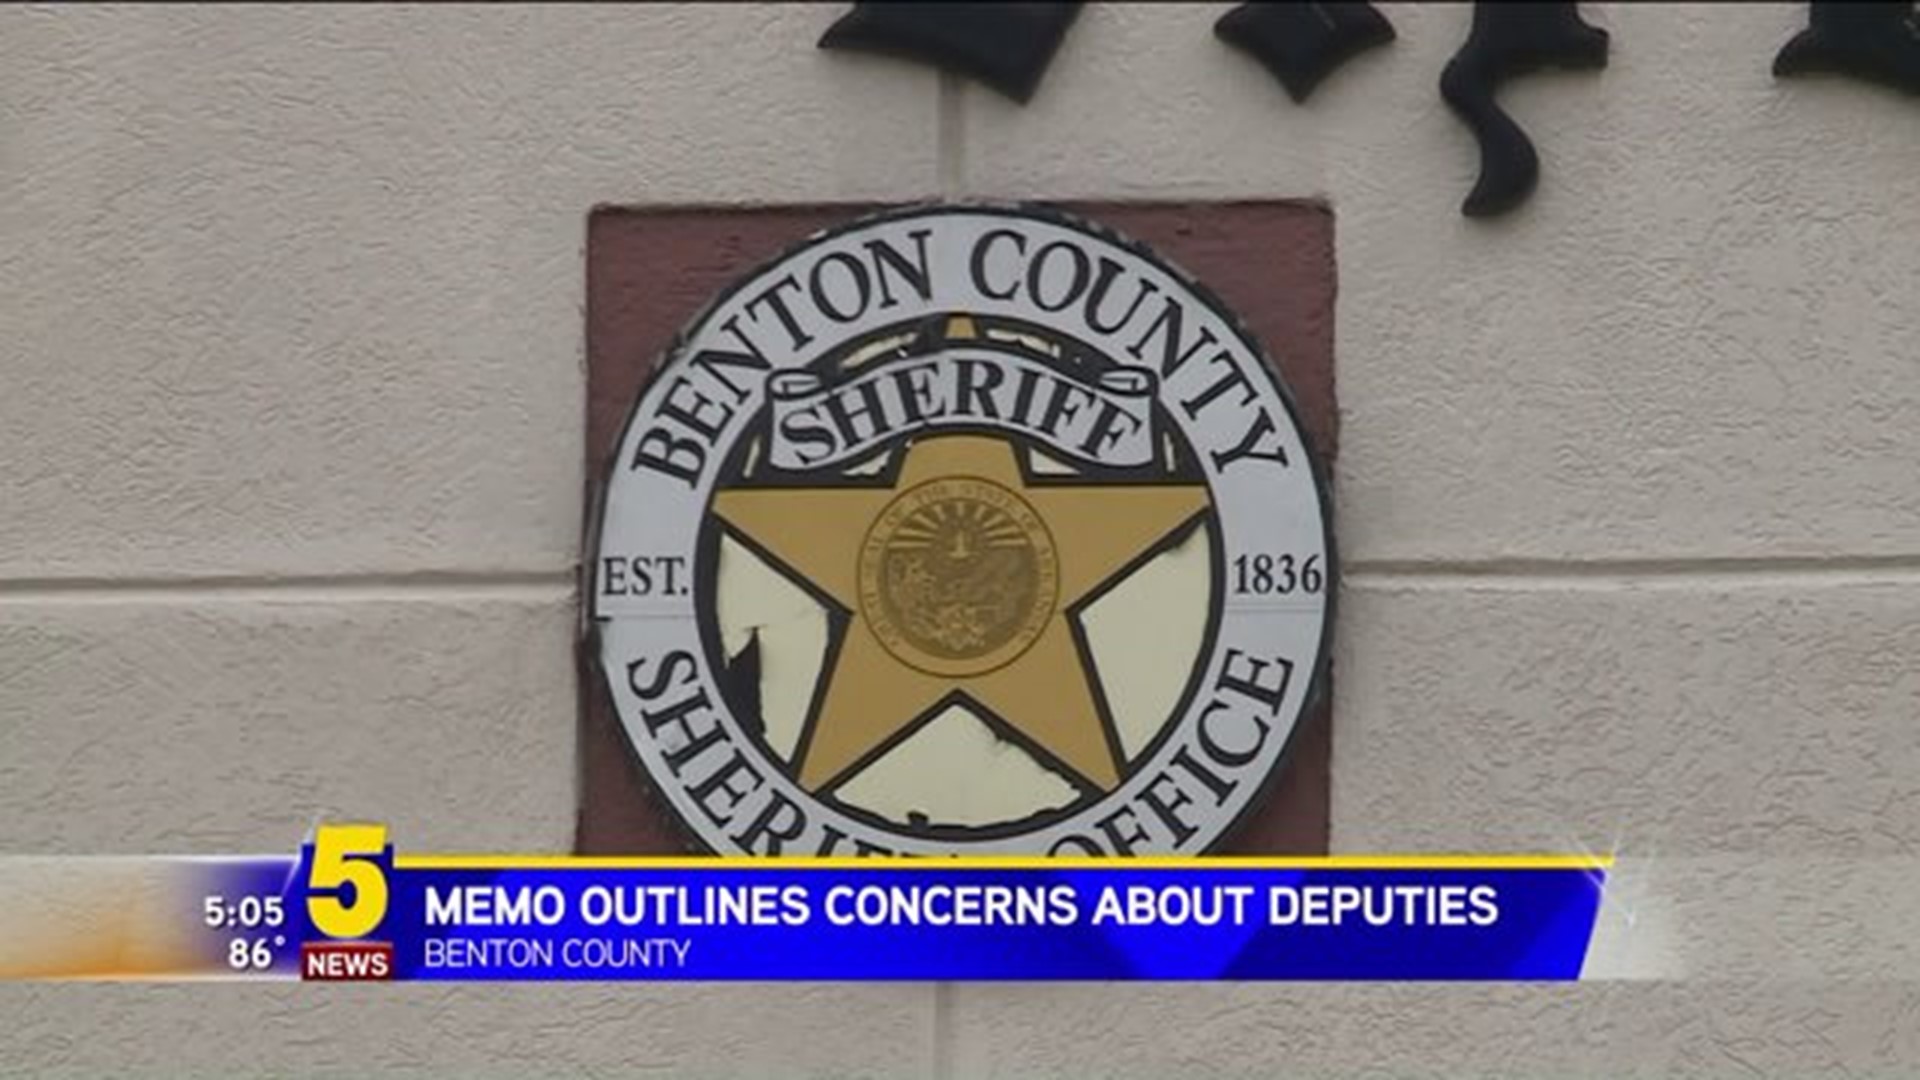 BENTON COUNTY DEPUTY COMPLAINTS